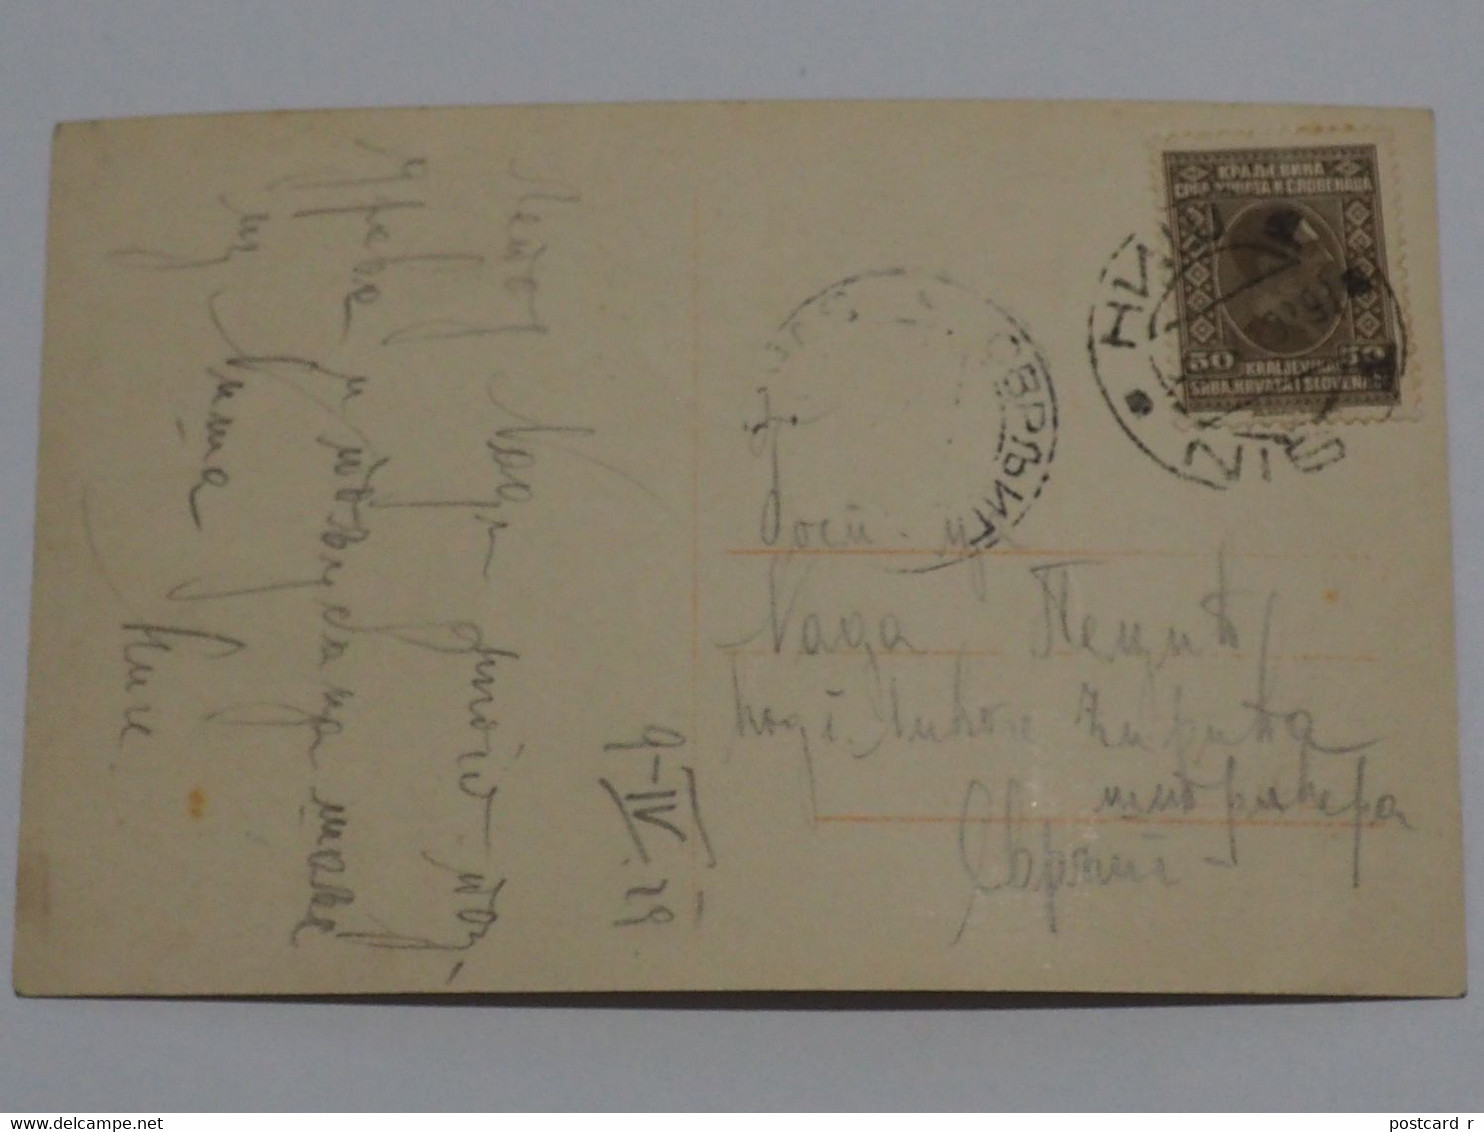 Actor Stefica Vidacic  Stamp 1928 A 216 - Artistas